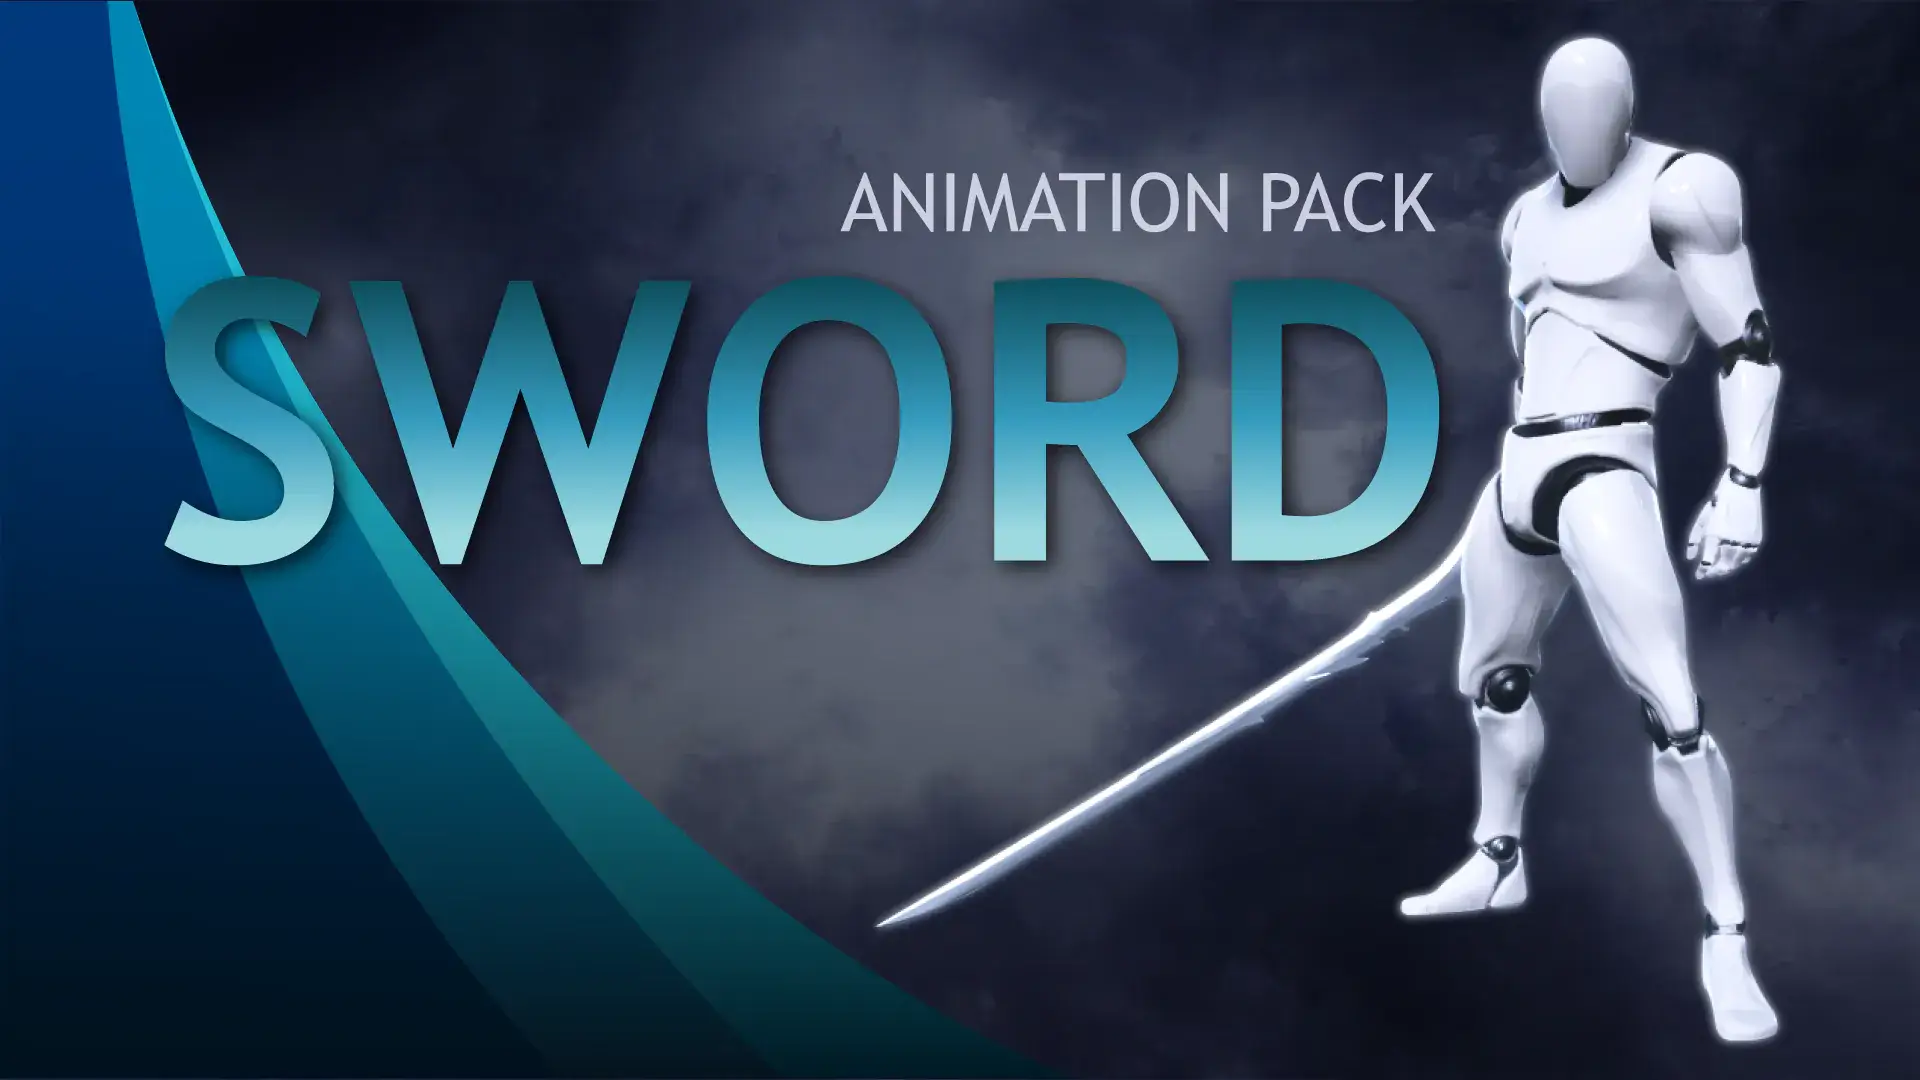 【UE4/5】击剑动画资产包 Sword Animation Pack